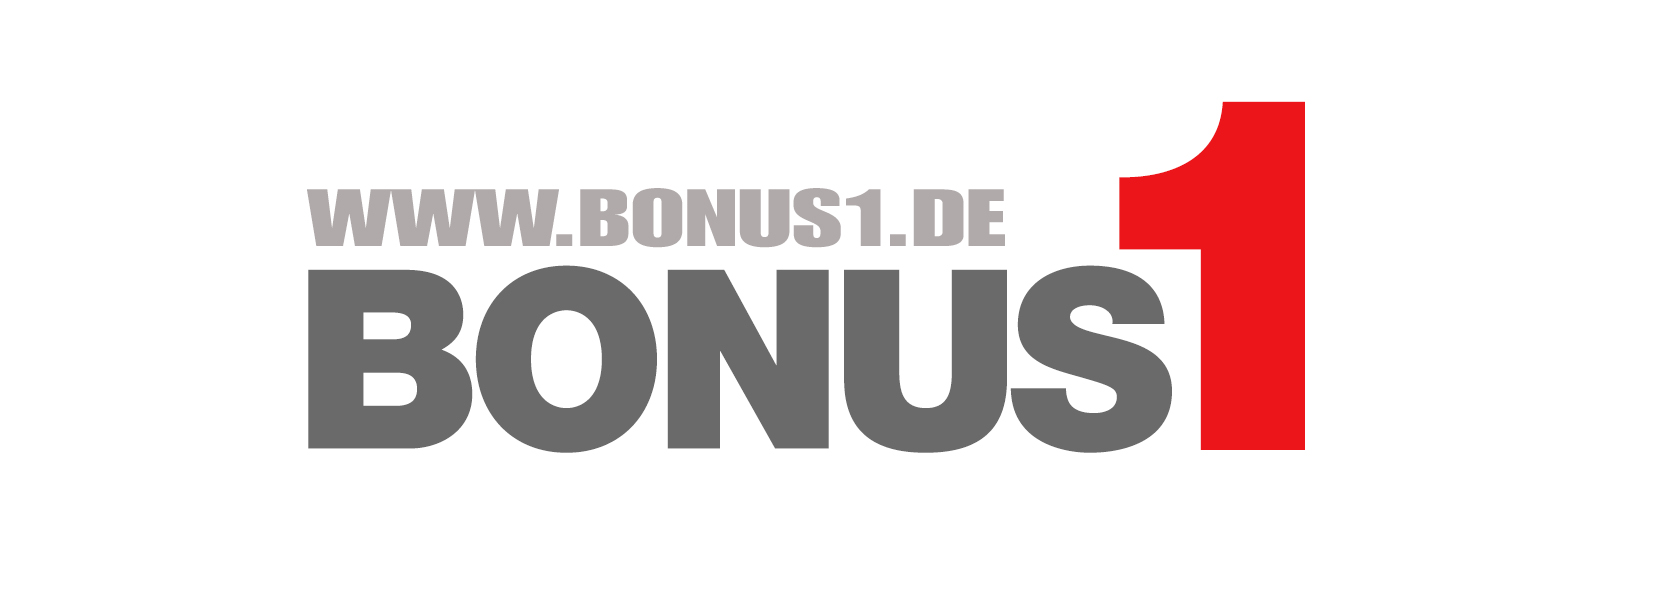 Bonus1